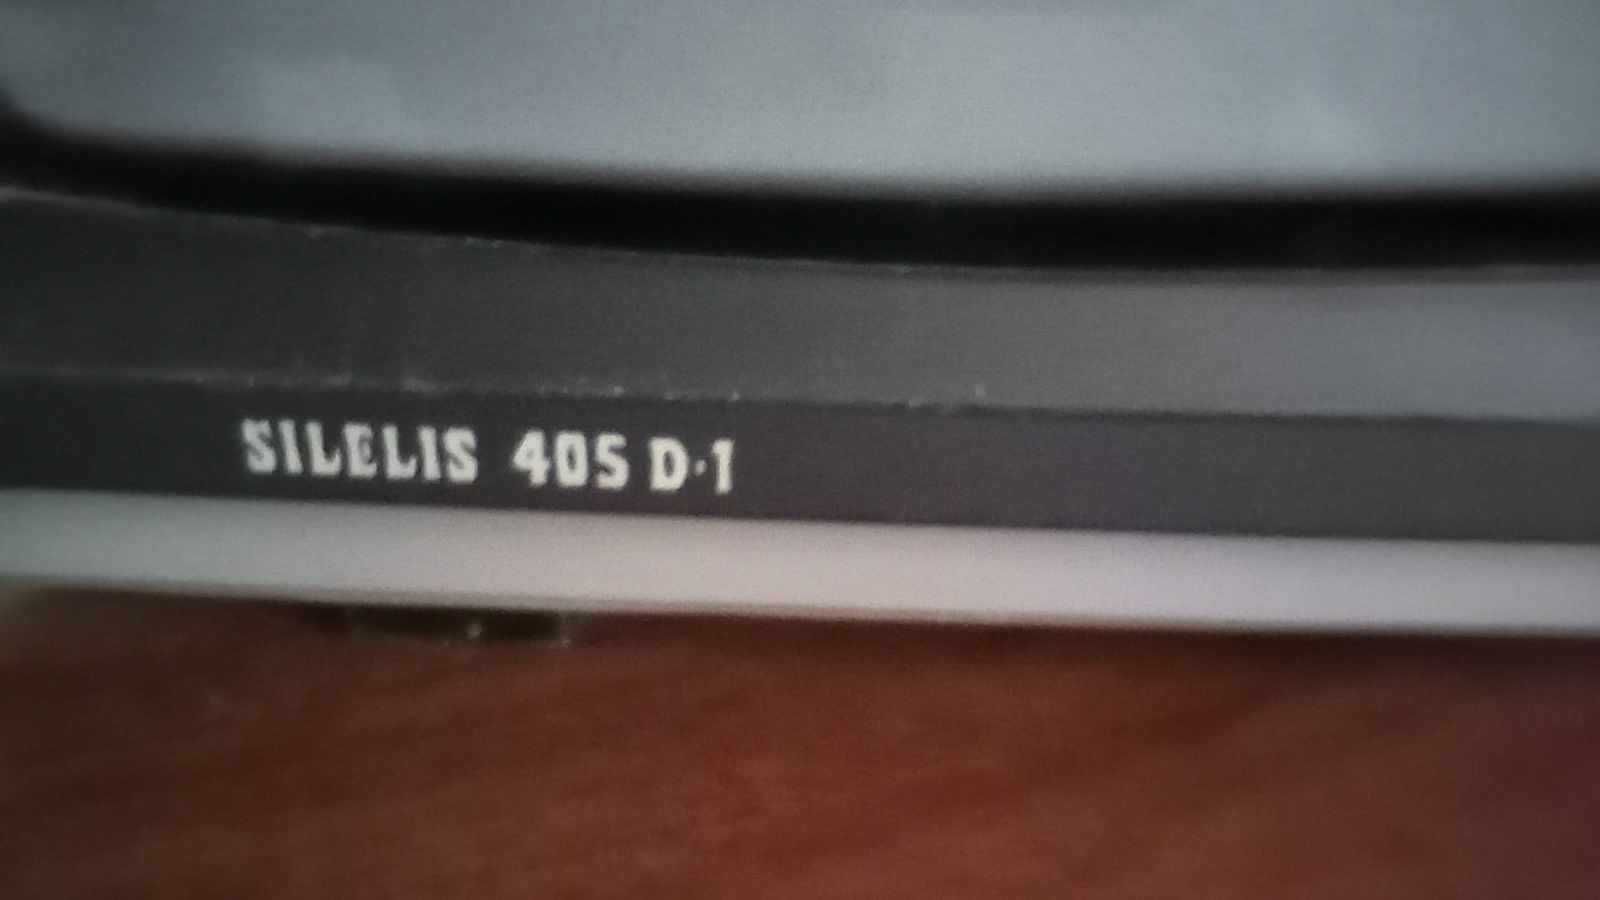 Stary telewizor turystyczny SILELIS 405 D-1